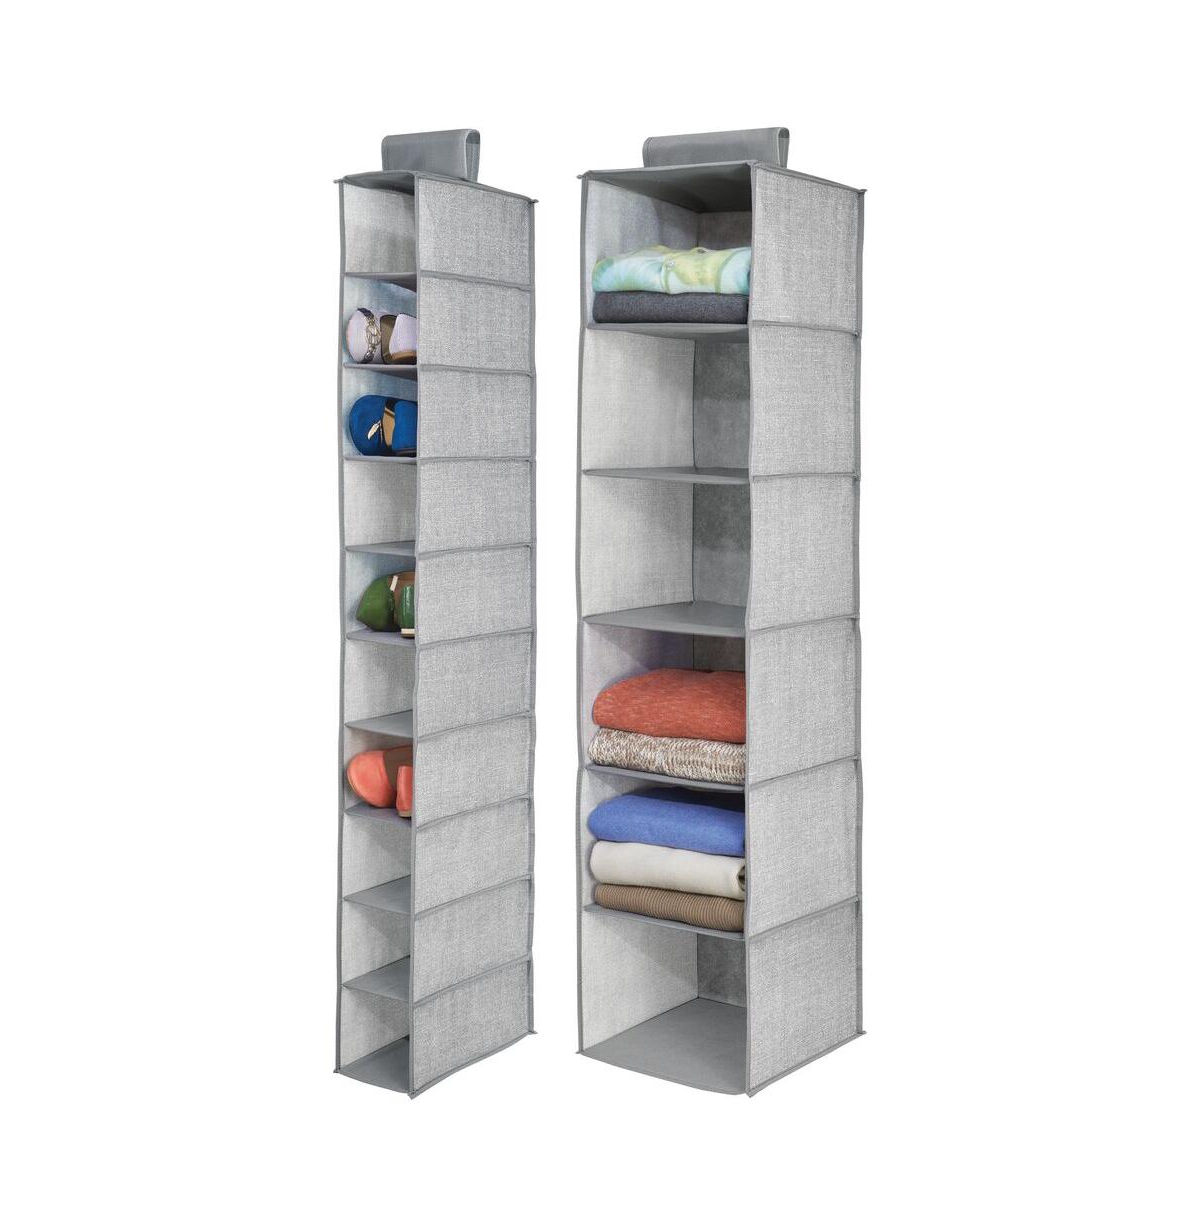 Fabric Over Rod Hanging Closet Storage Organizers Set of 2 - Gray